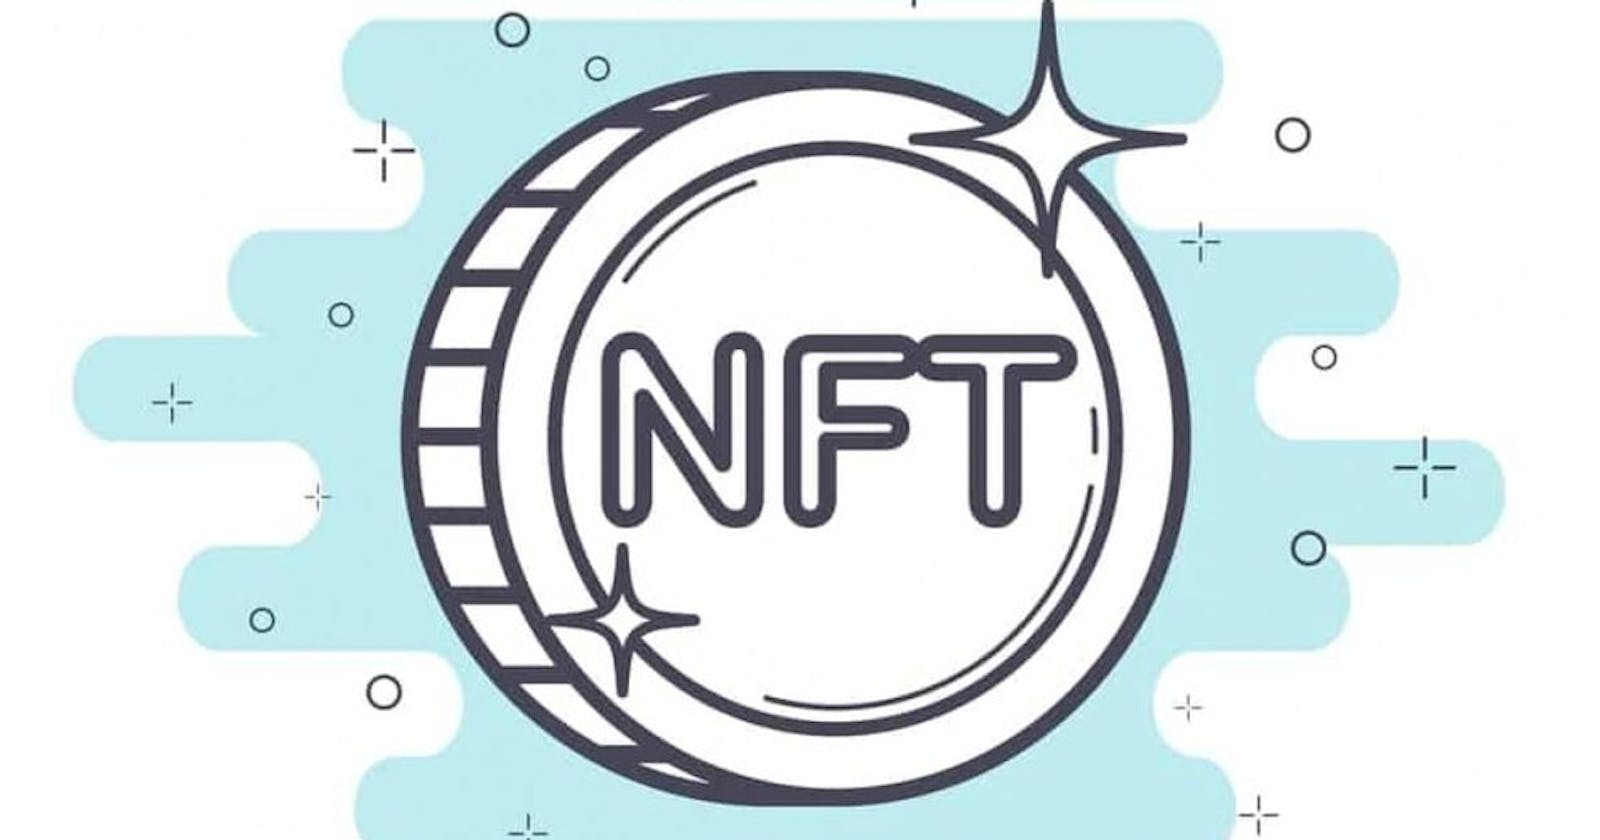 Musicians Embrace the New NFT Trend - A Symphony of Digital Innovation